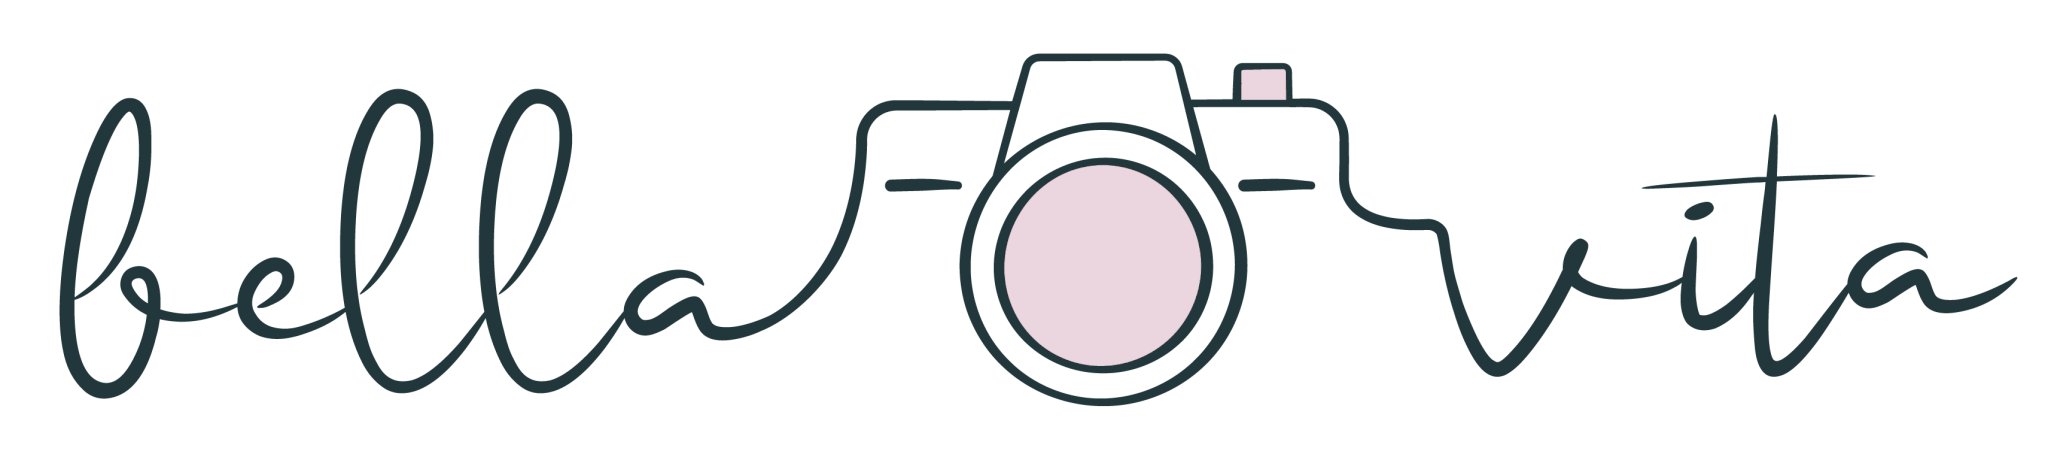 The logo for bella vita photography.